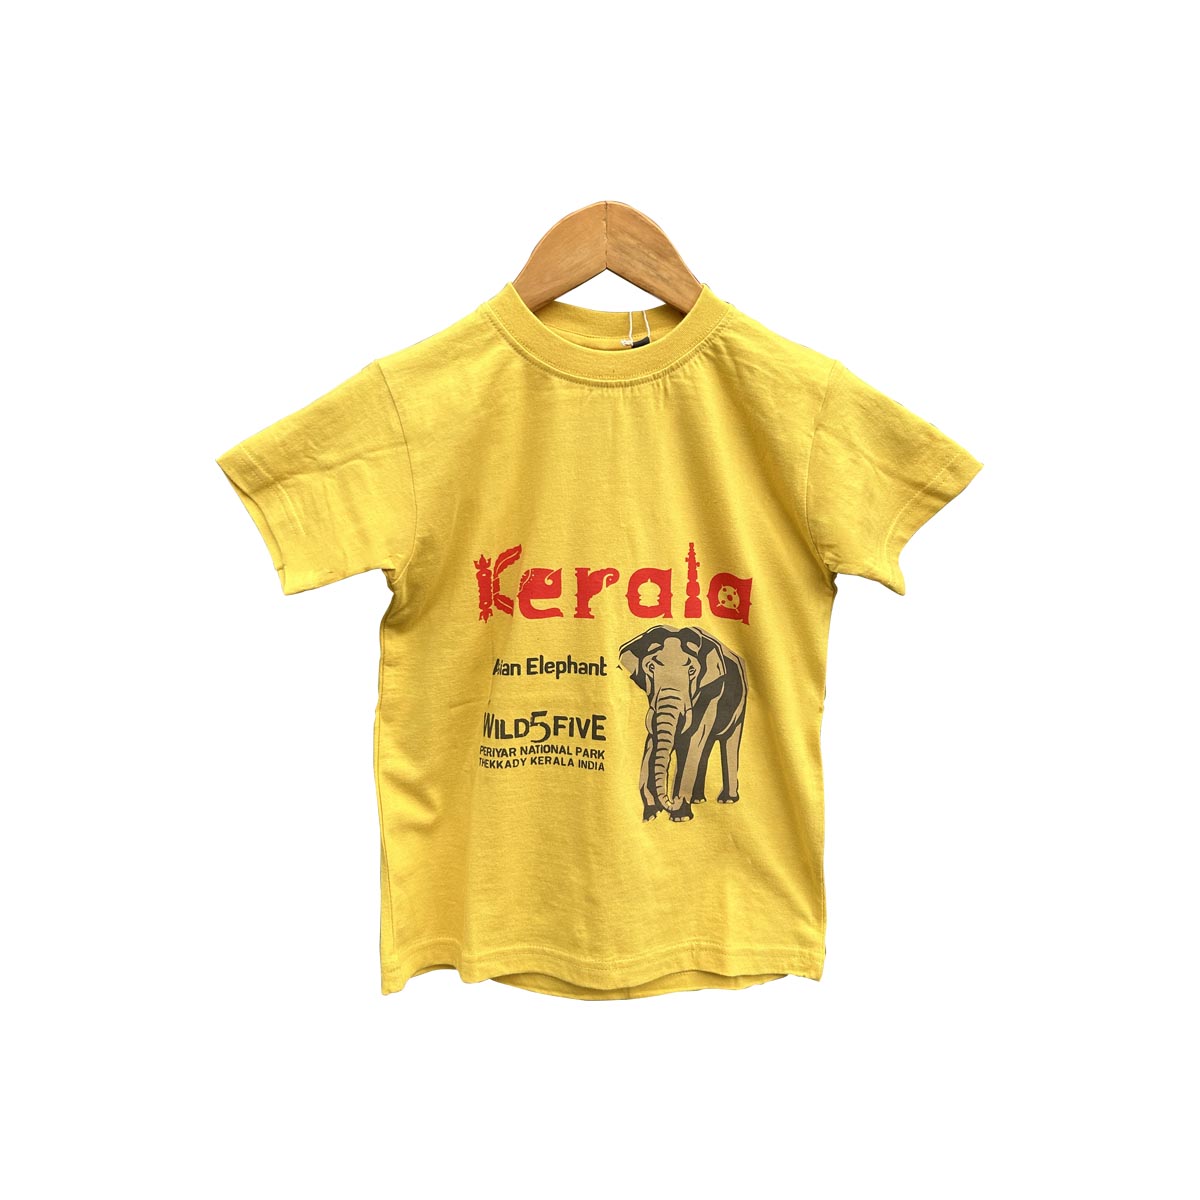 Kerala Wild5 Elephant — Kids T-shirt (Yellow & Pink)